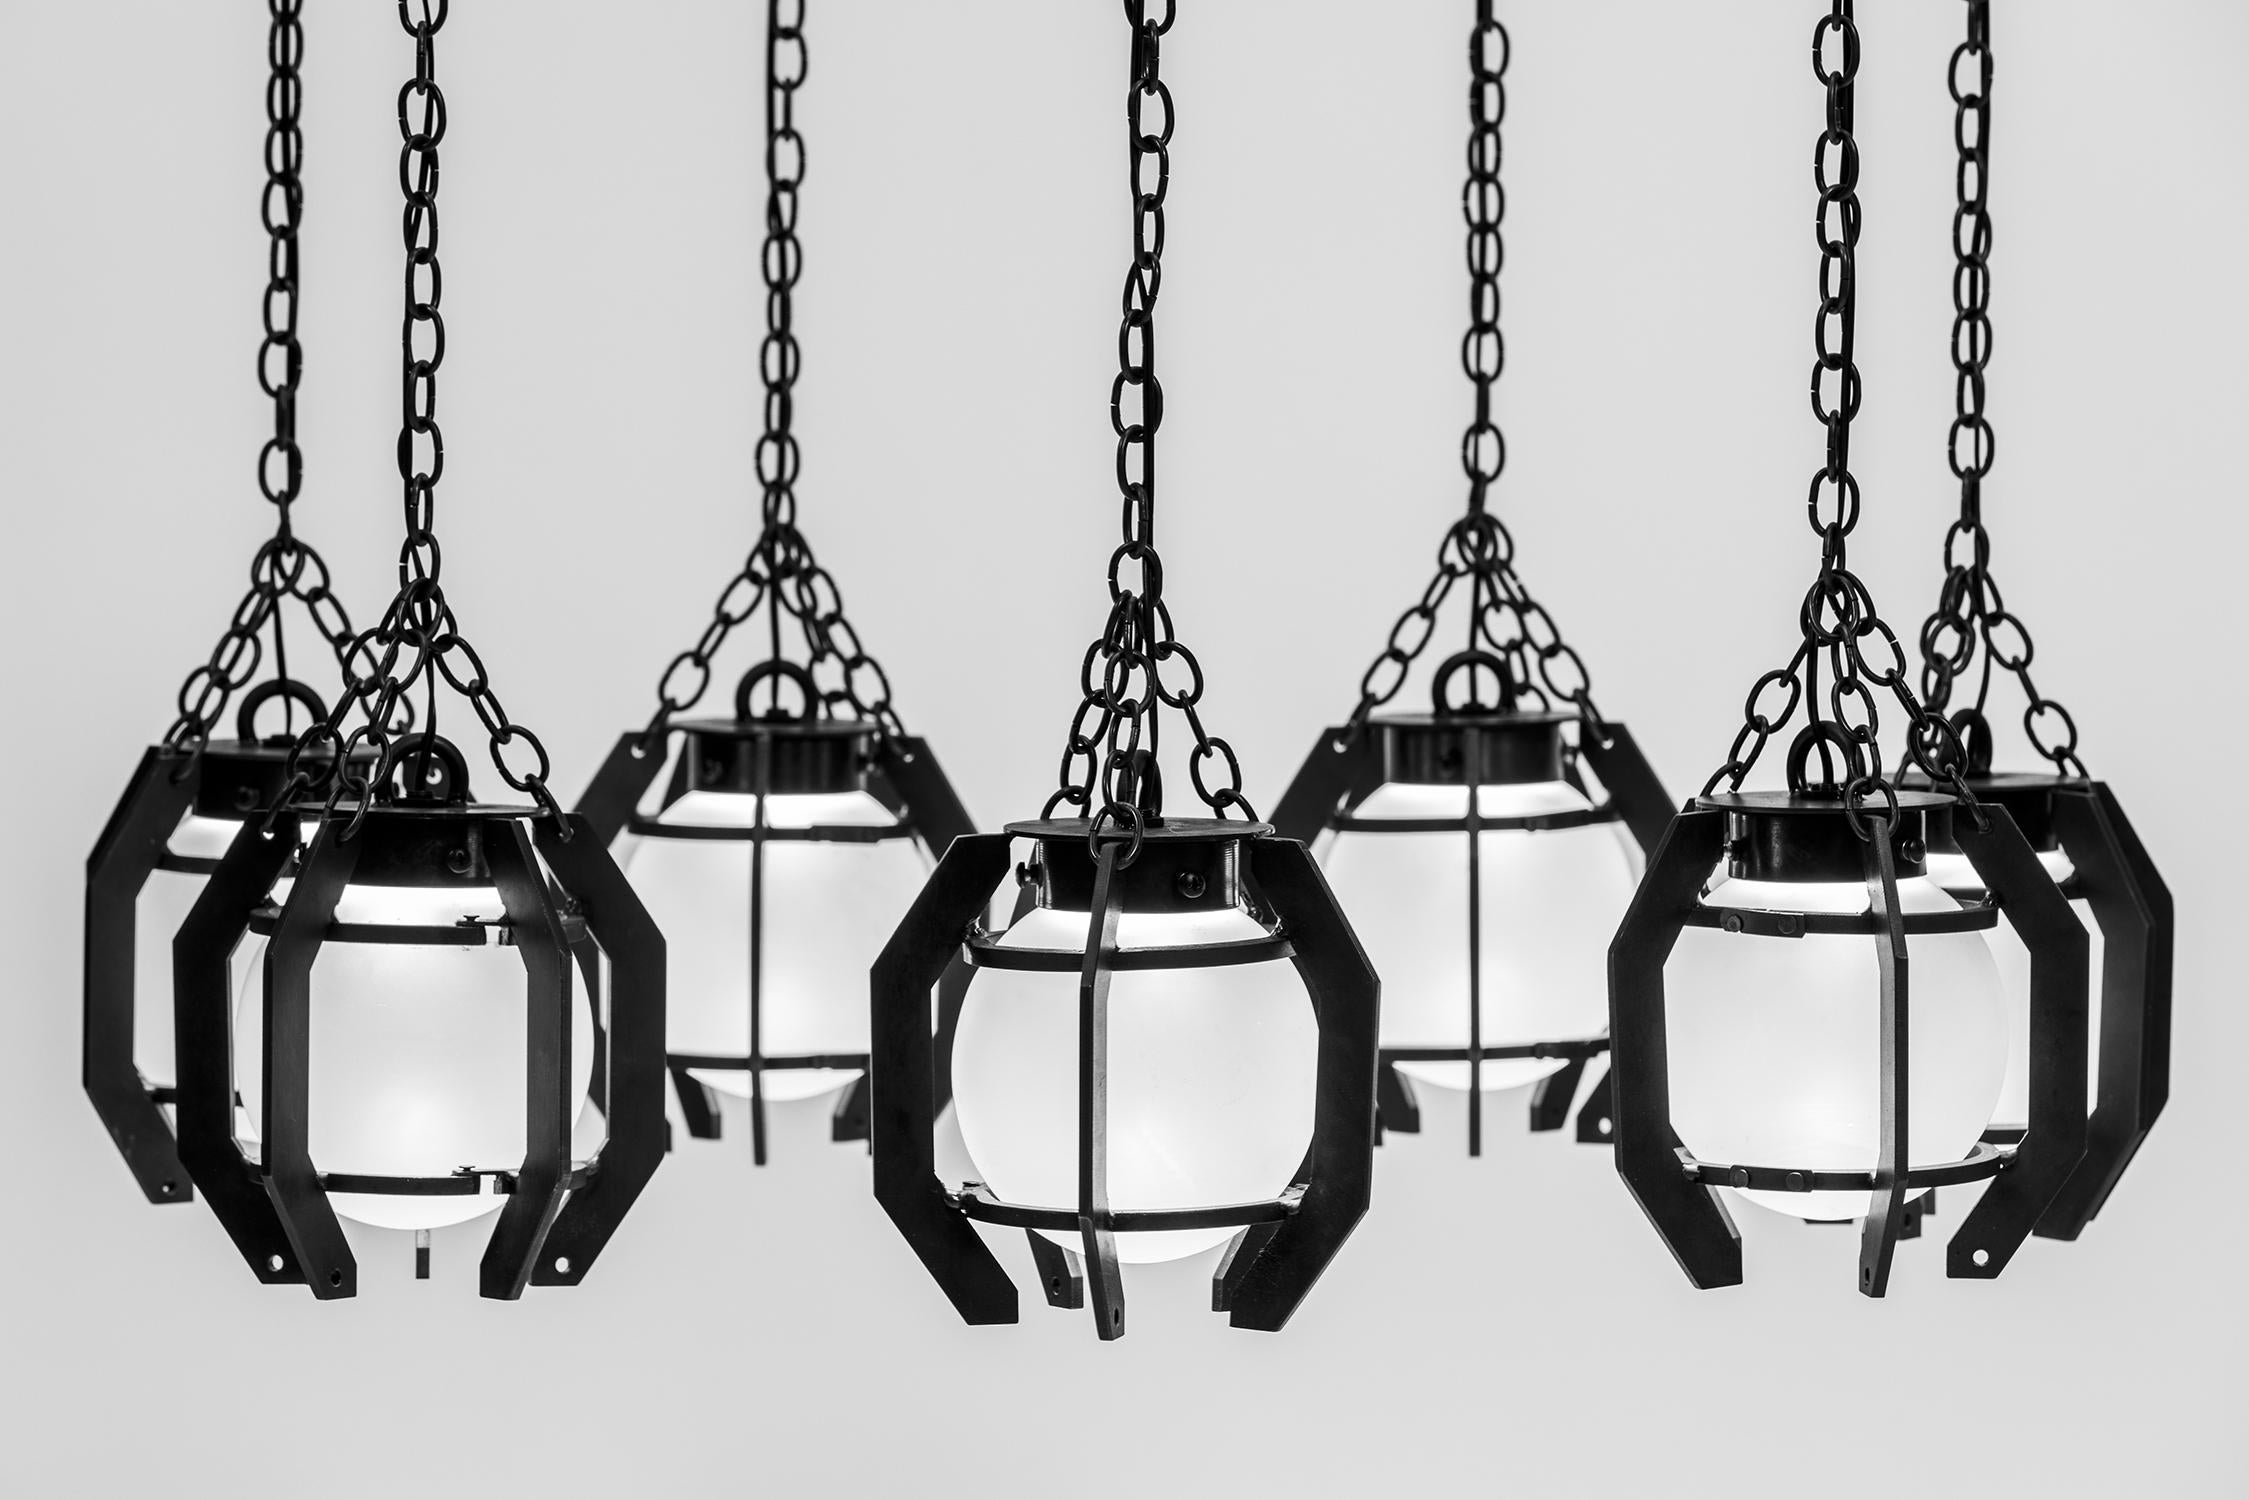 Grand industrial chandelier created of forge-burnt black steel. Each 10